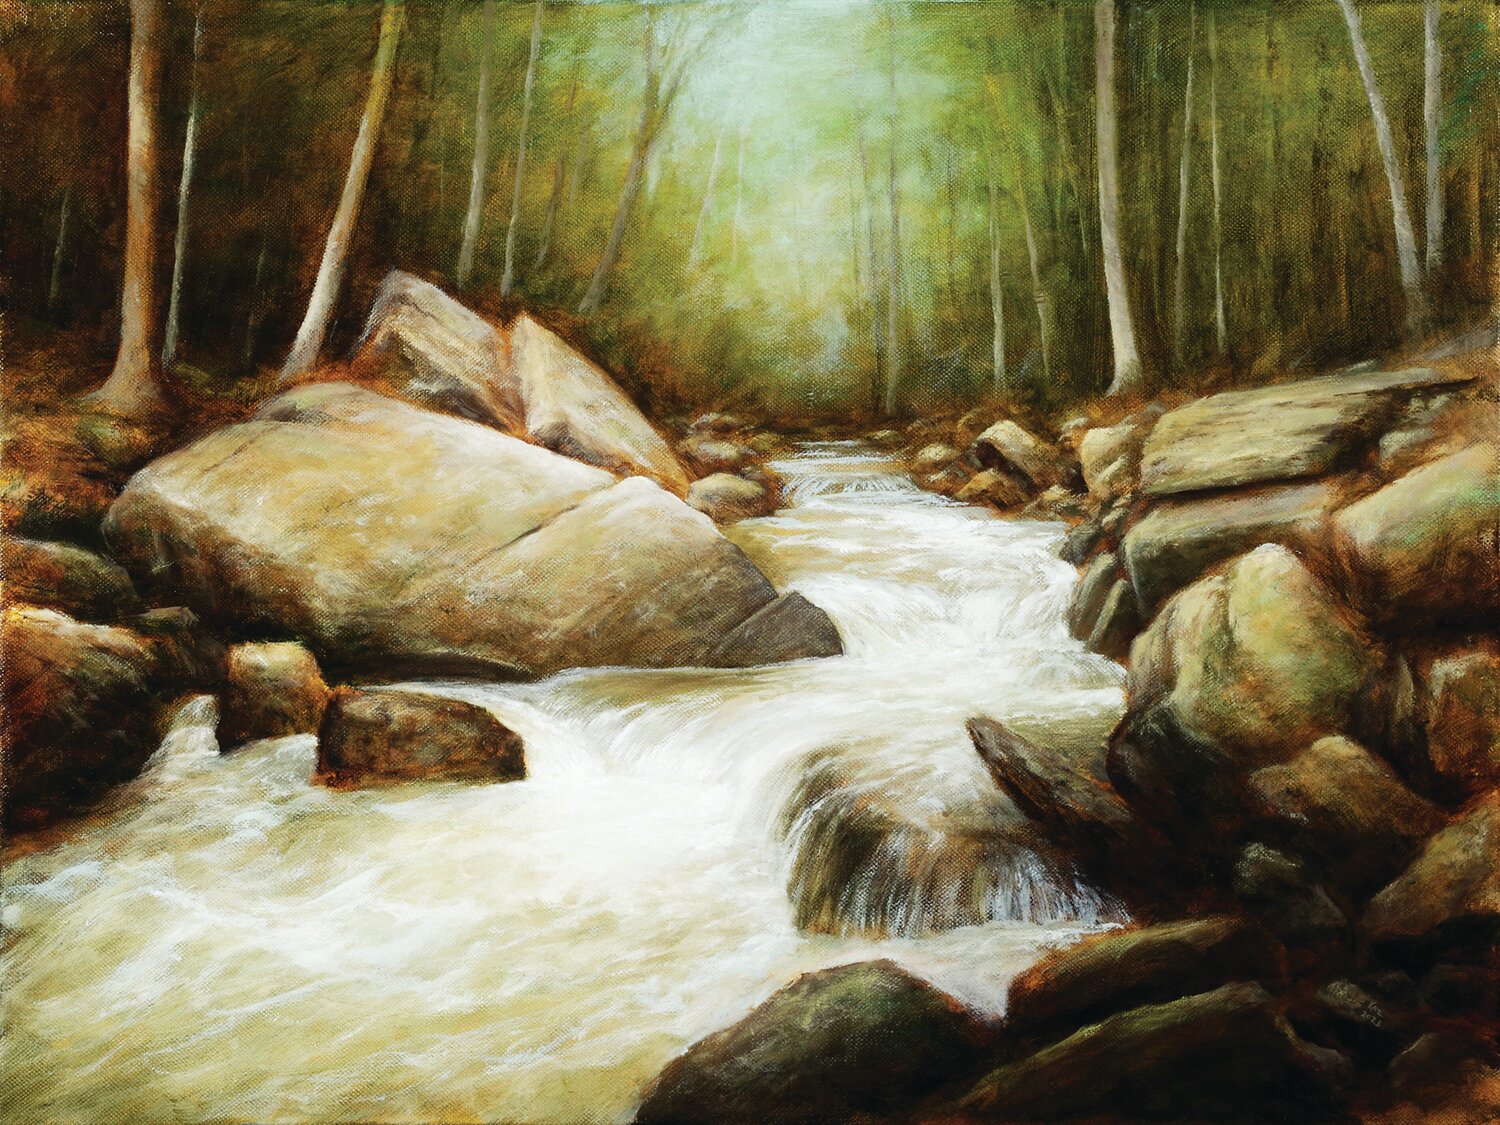 Joe Kazimierczyk’s “Black River Cascade” is an oil on canvas.